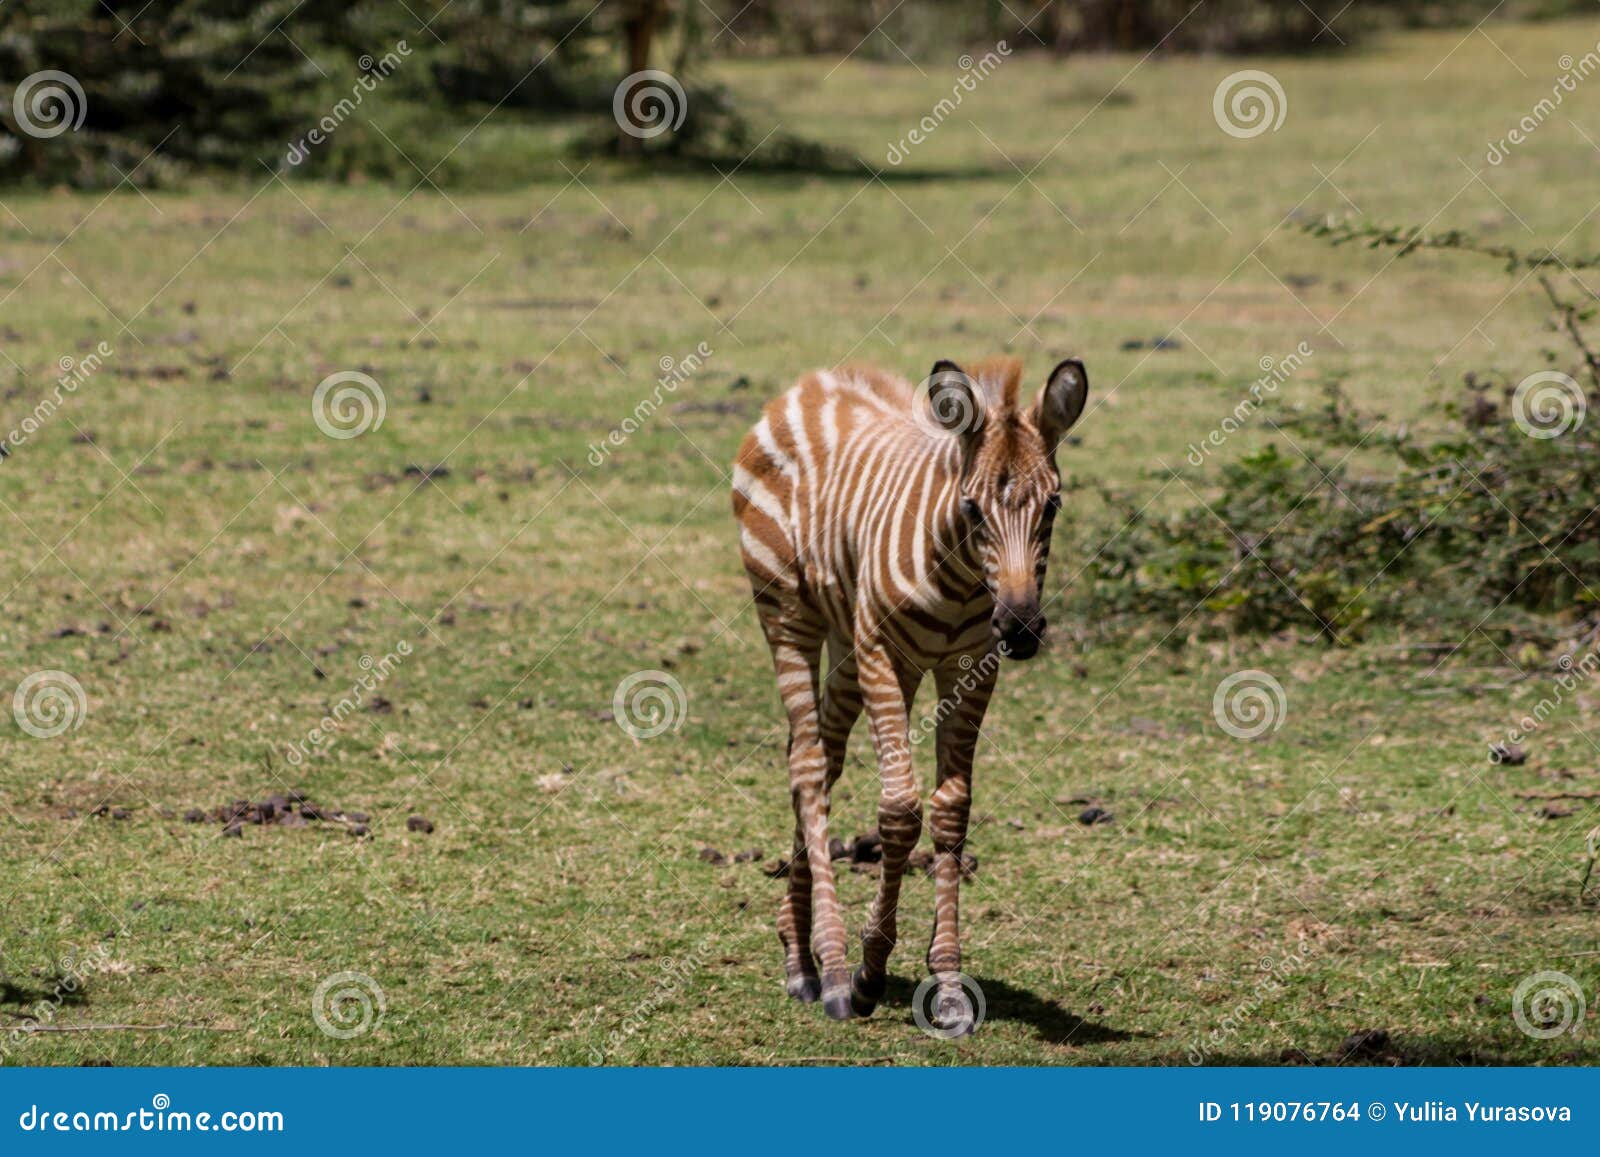 Kleine Bruine Zebra in Afrikaanse Savanne Foto - Image of velen, afrika: 119076764